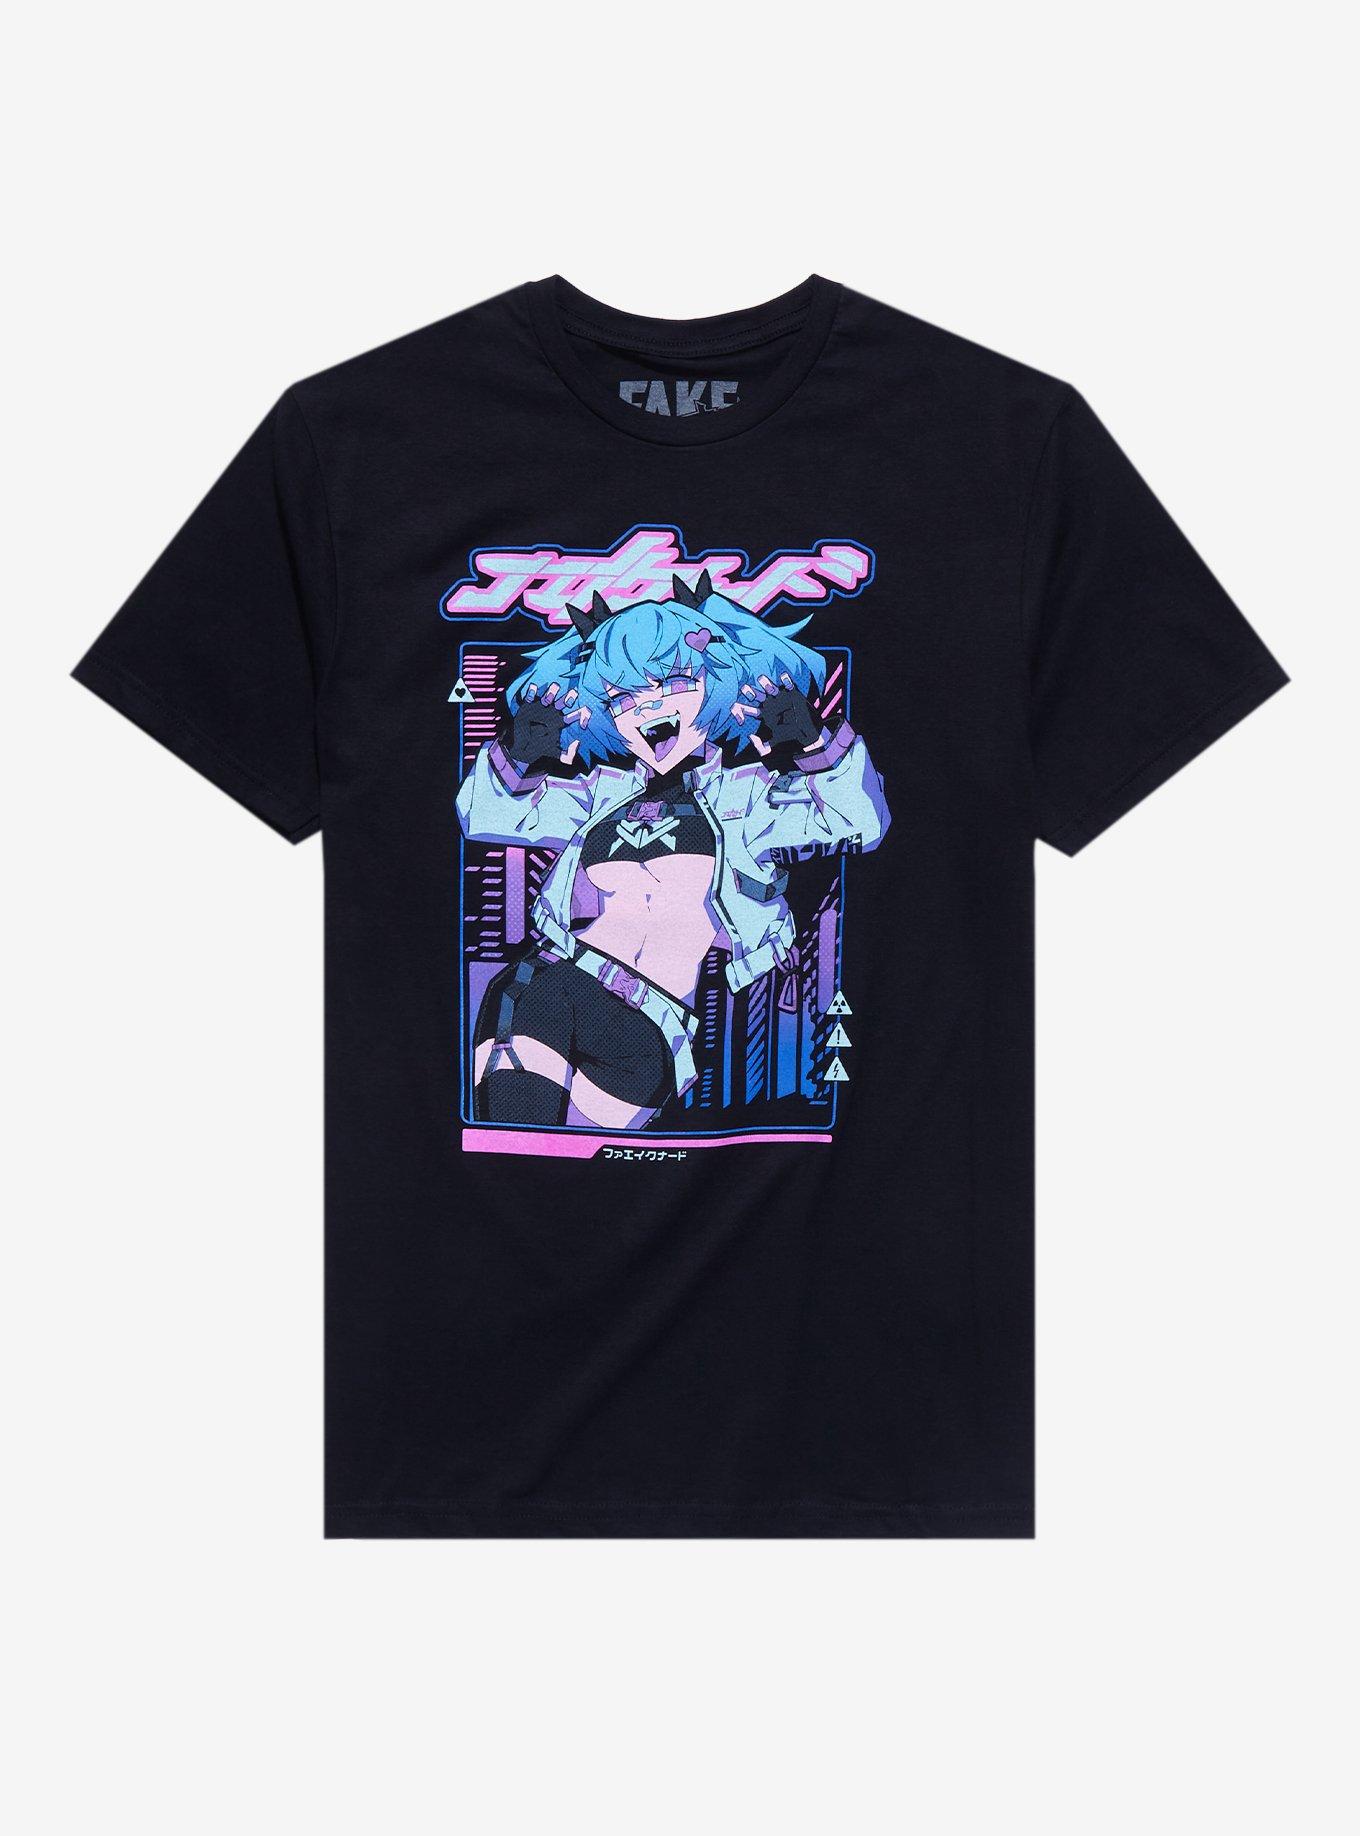 Anime Evil Smile T-shirt Essential T-Shirt for Sale by Sour-Neko